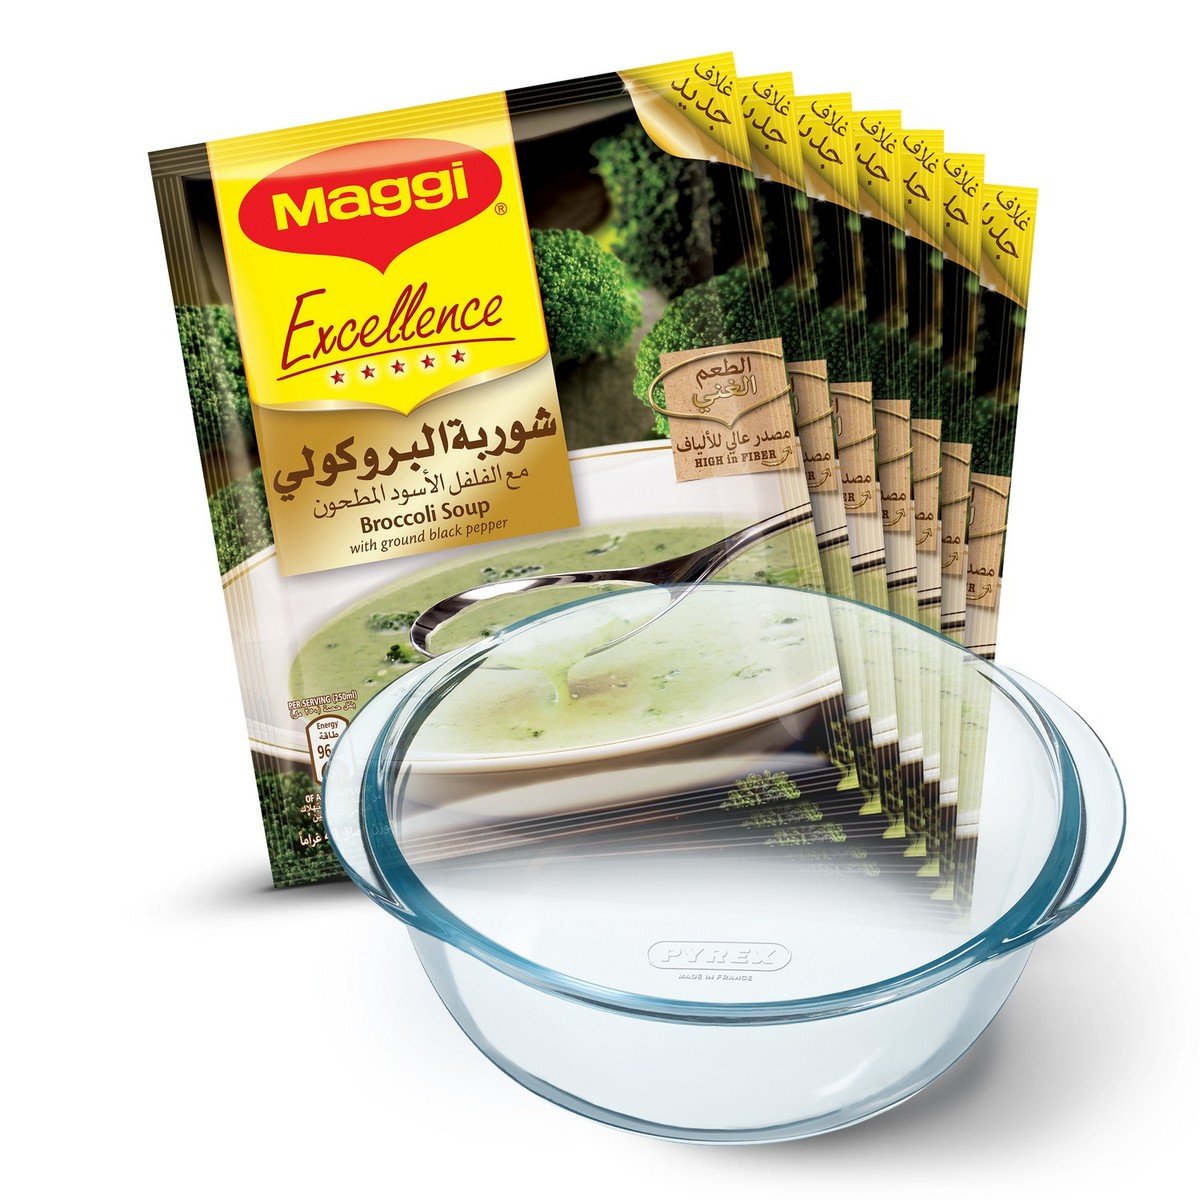 Maggi Excellence Broccoli Soup 48 g x 7 pcs + Pyrex Free